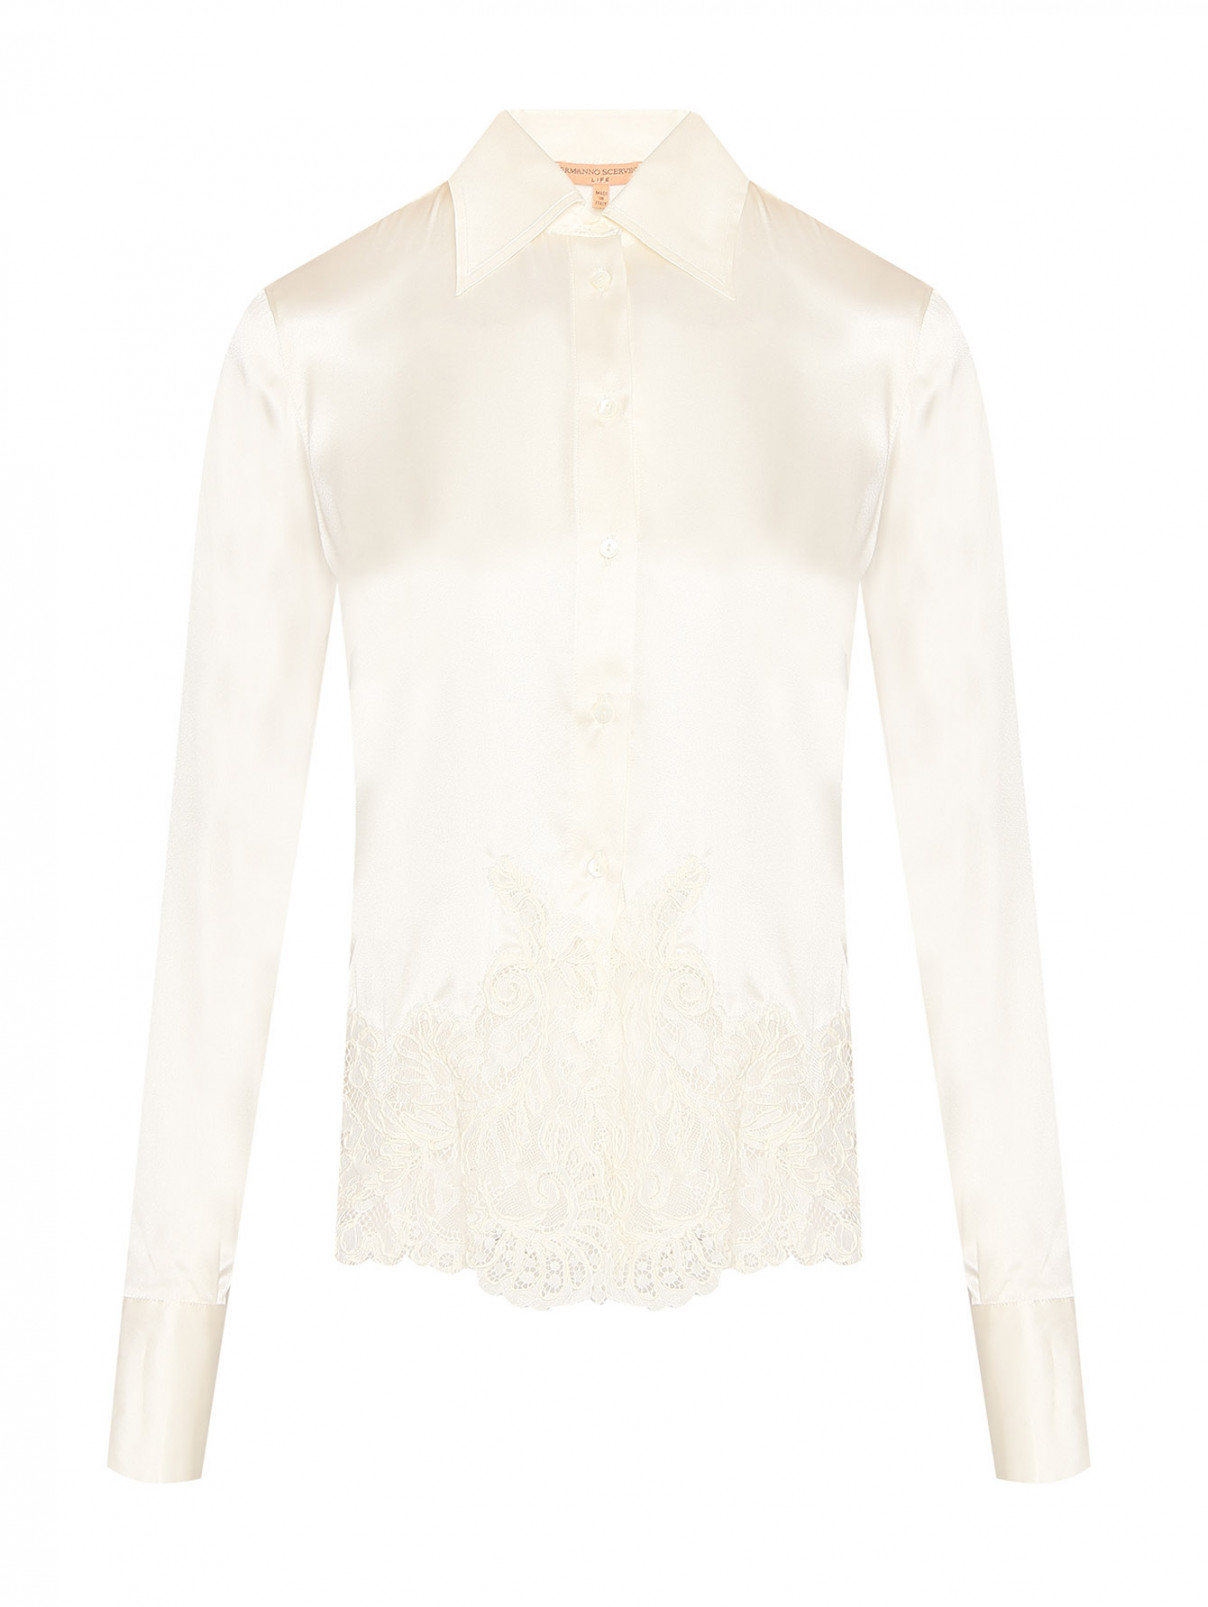 Рубашка из шелка с кружевом Ermanno Scervino  –  Общий вид  – Цвет:  Белый